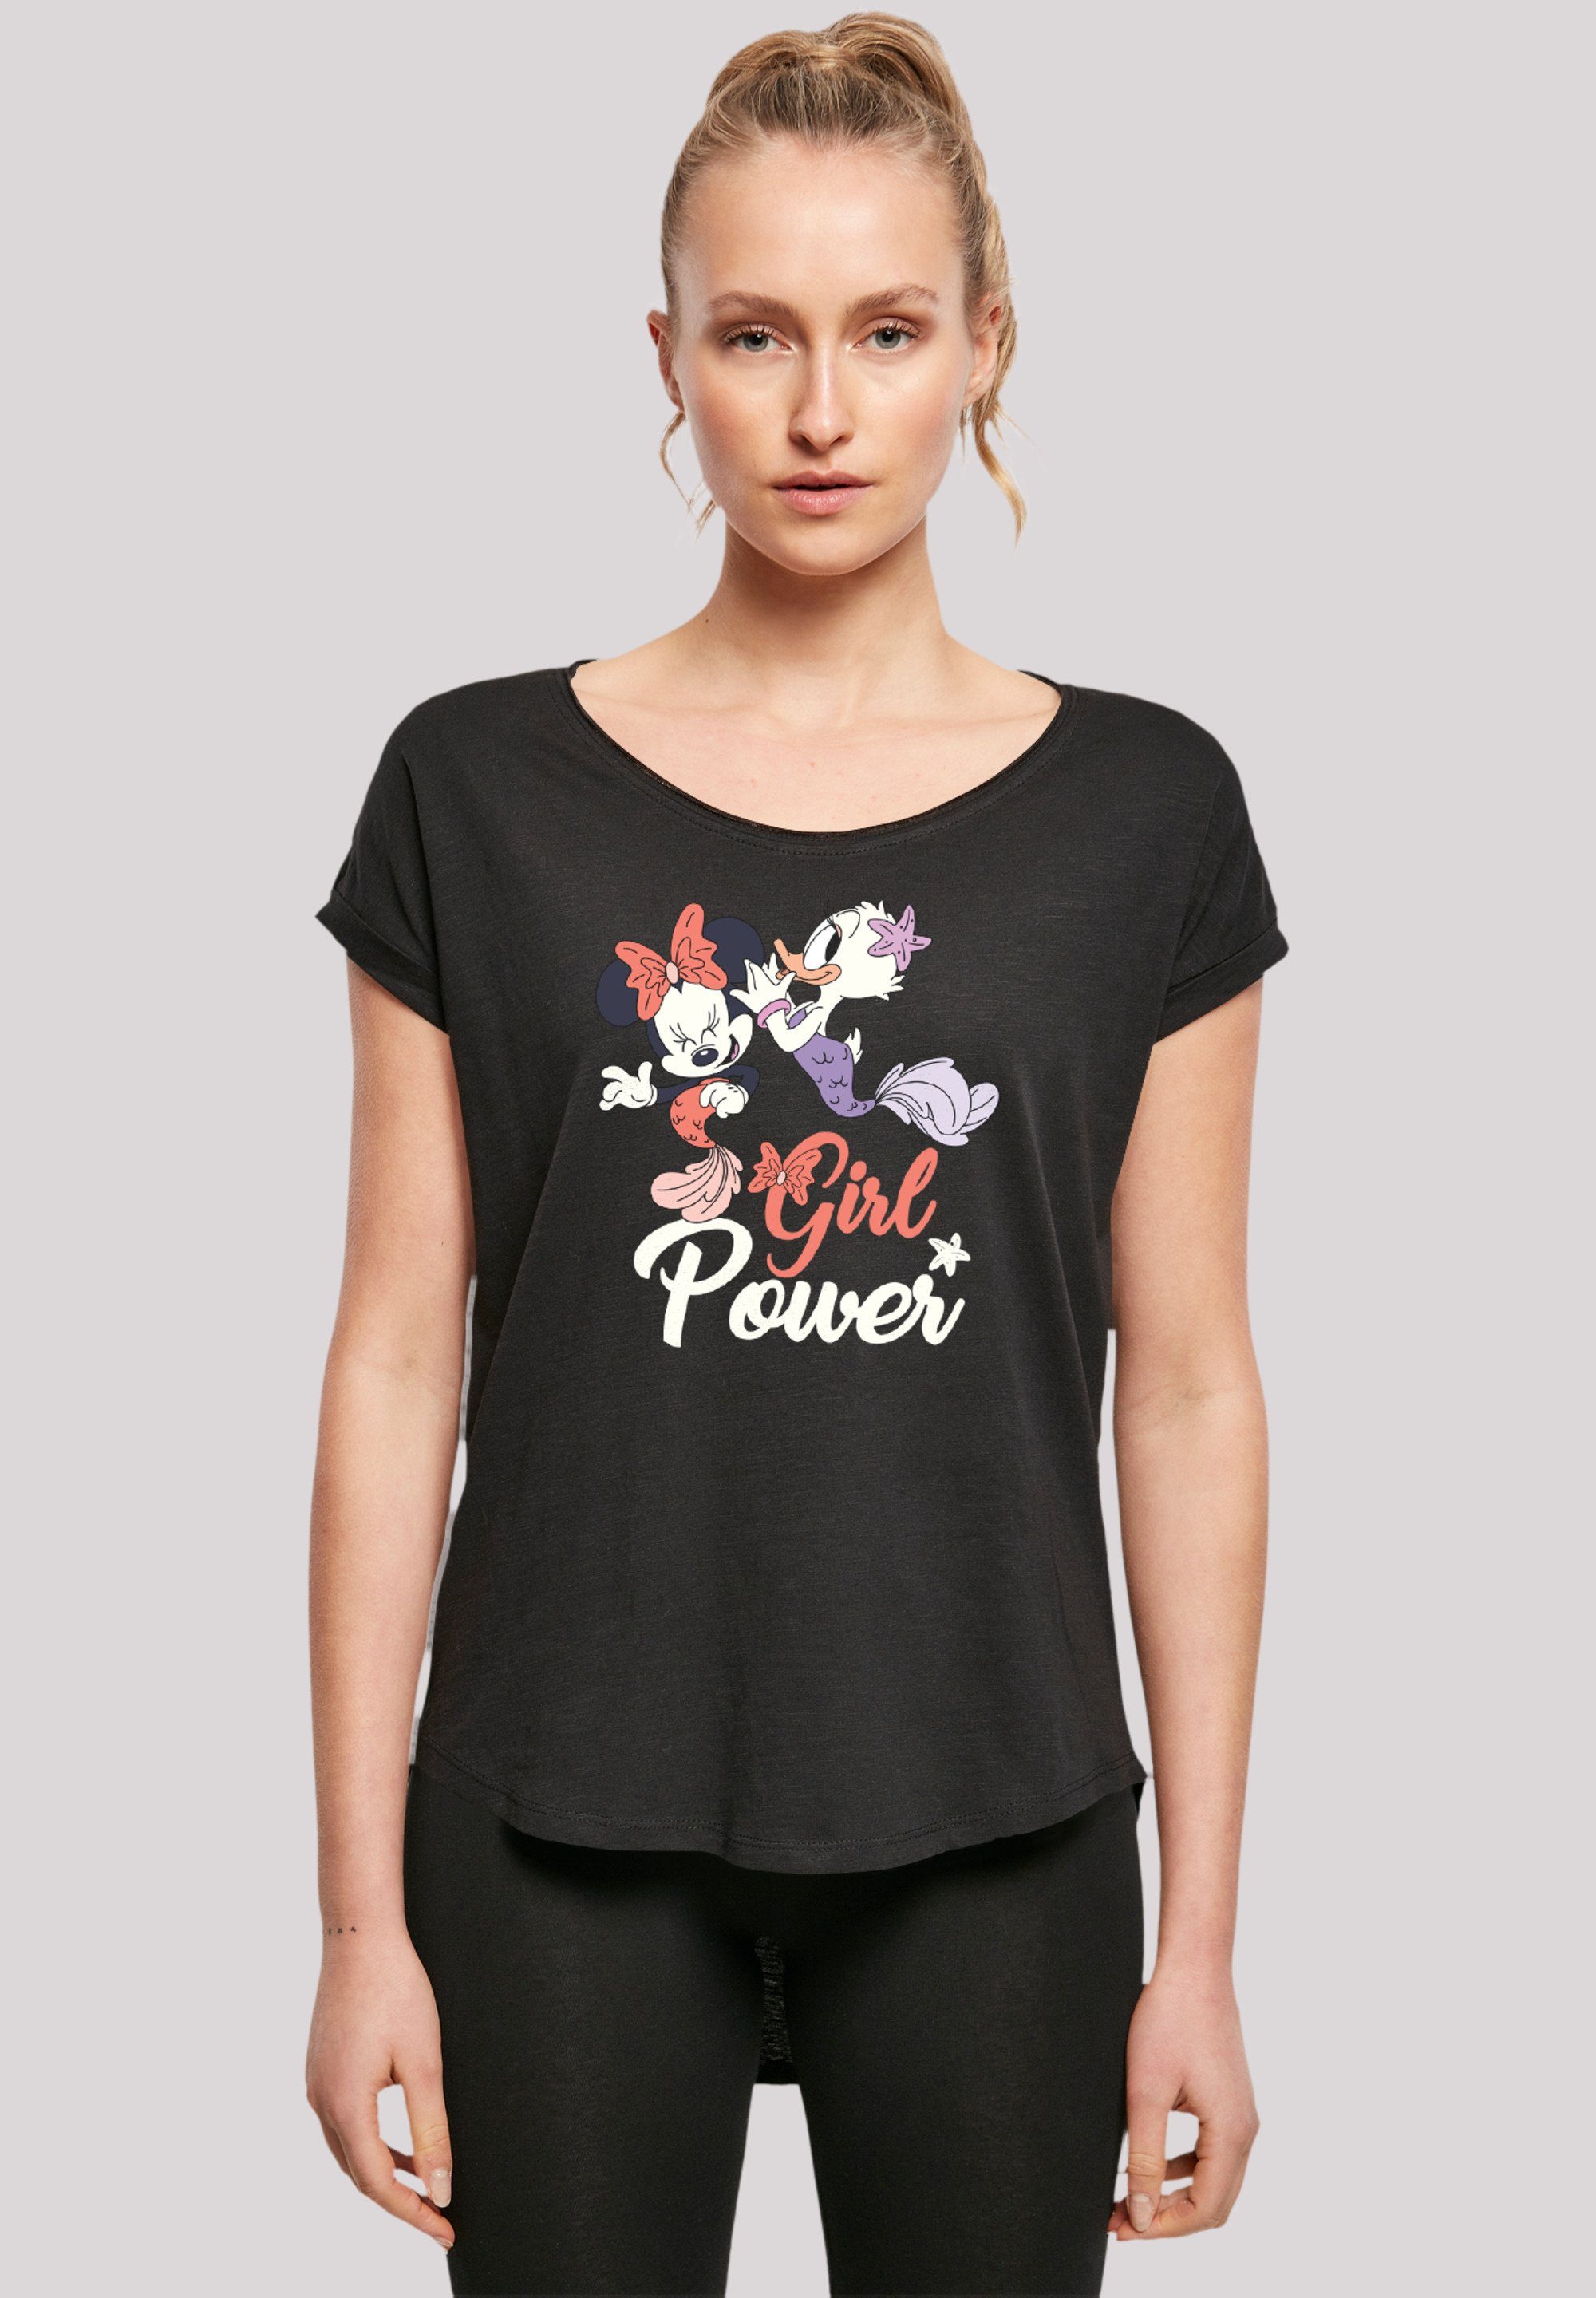 F4NT4STIC T-Shirt Disney Minnie Mouse Minnie & Daisy Power Premium Qualität